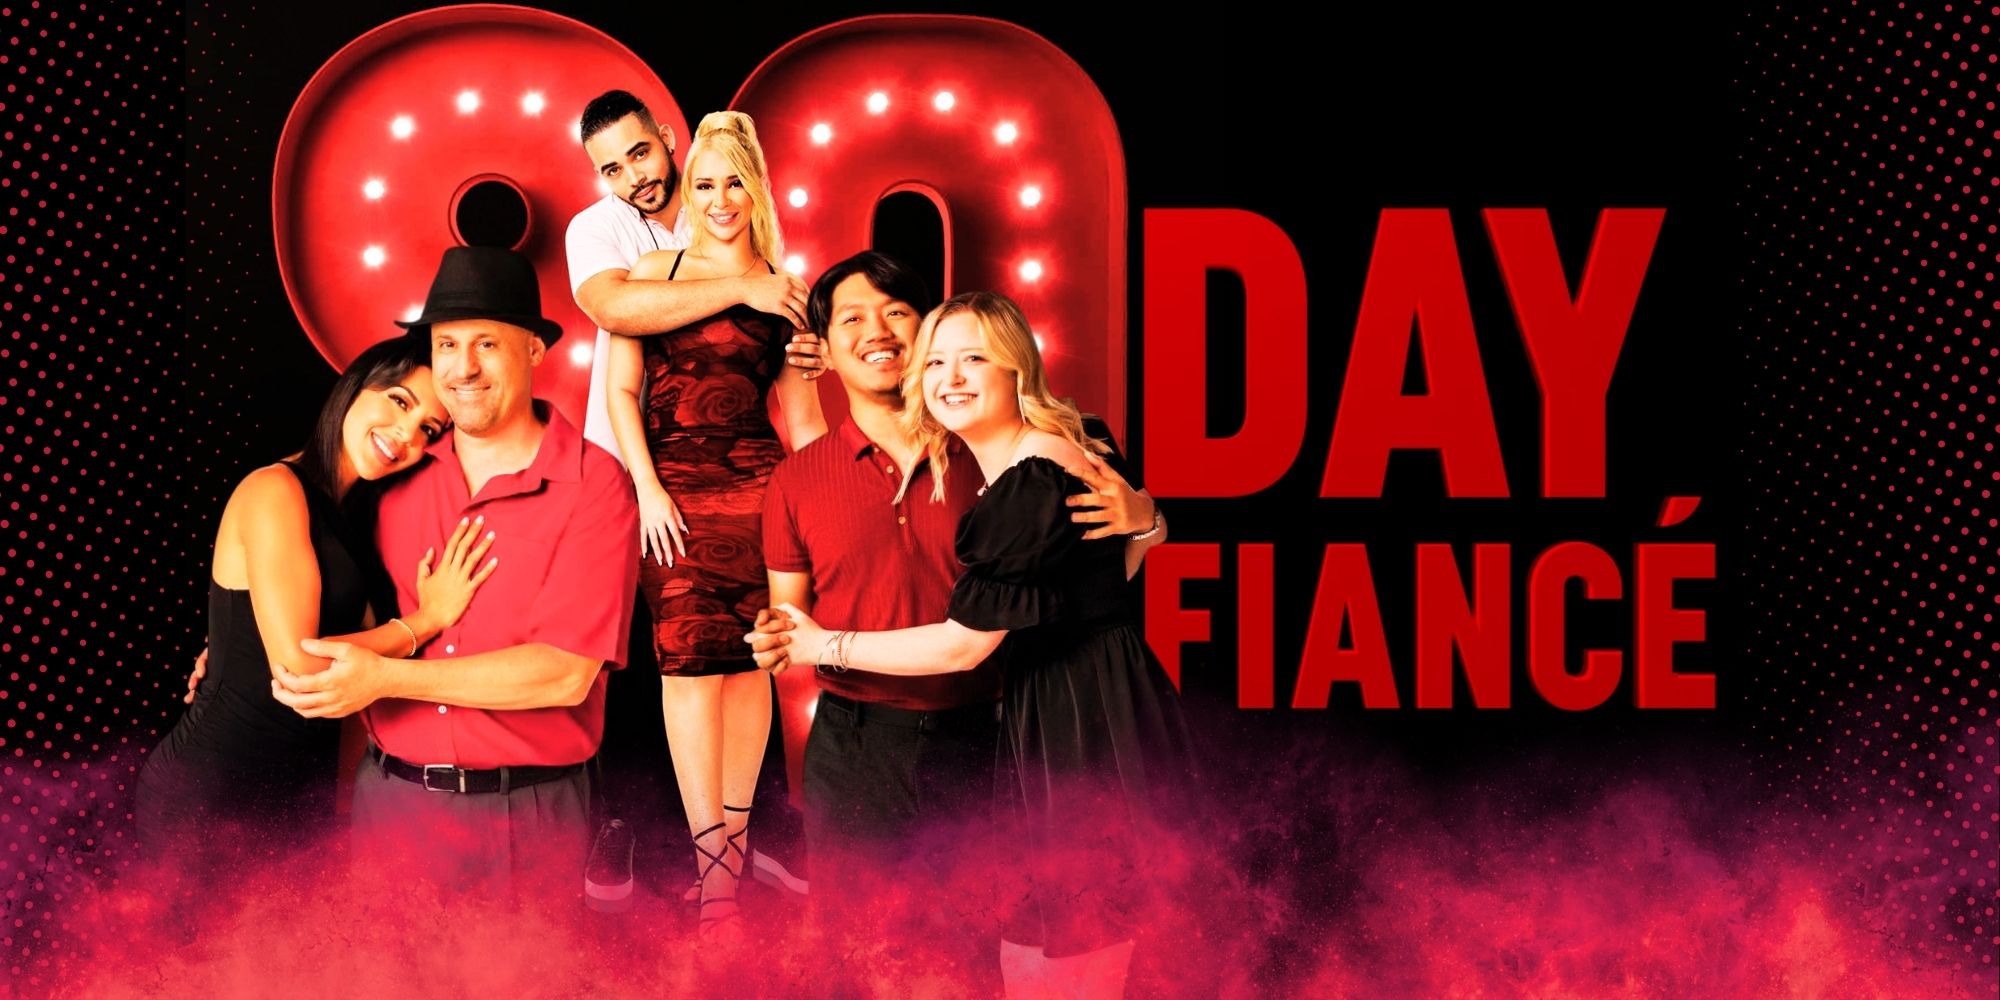 90 Day Fiance season 10 cast members in promo shots montage